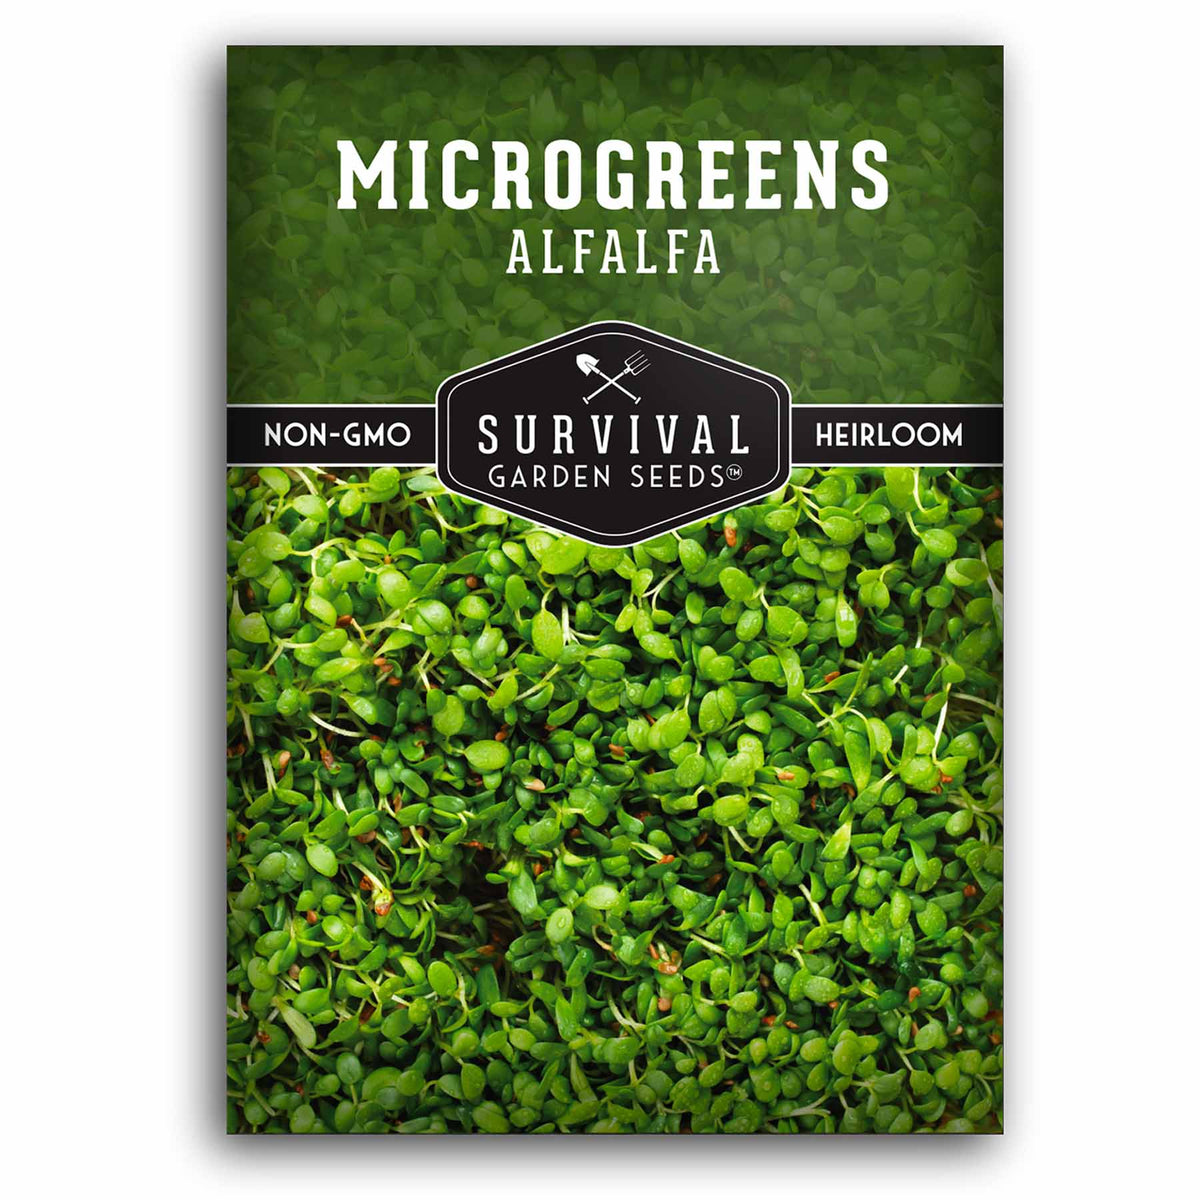 1 packet of Alfalfa Microgreens seeds